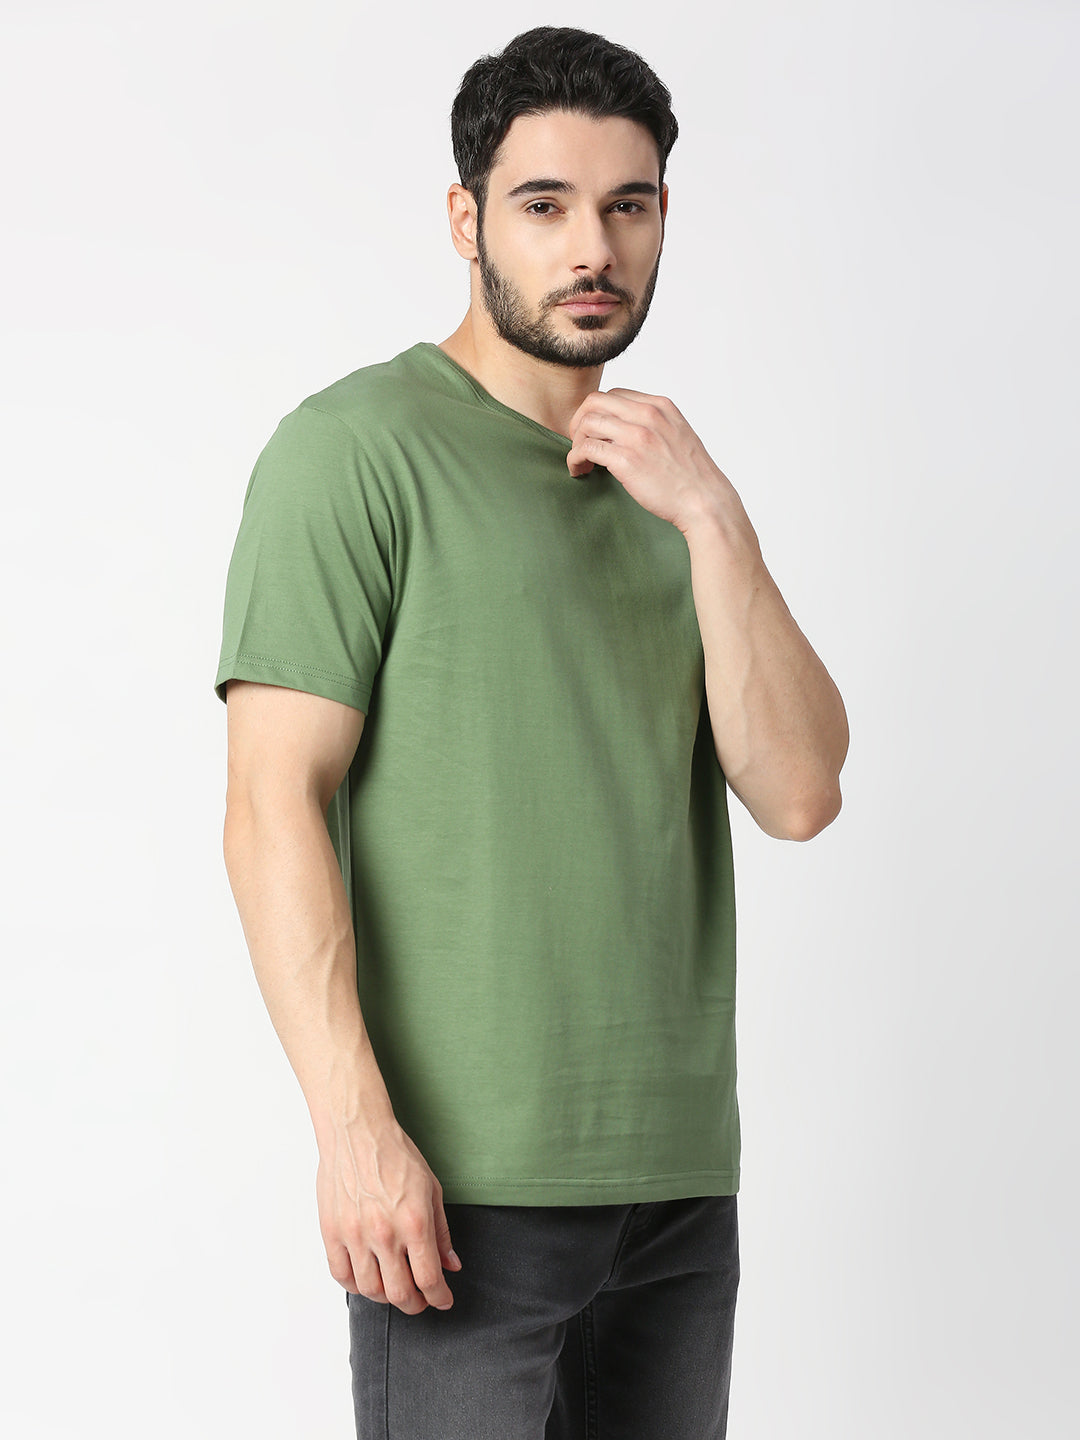 Buy Blamblack Solid Green Half Sleeved T-shirt